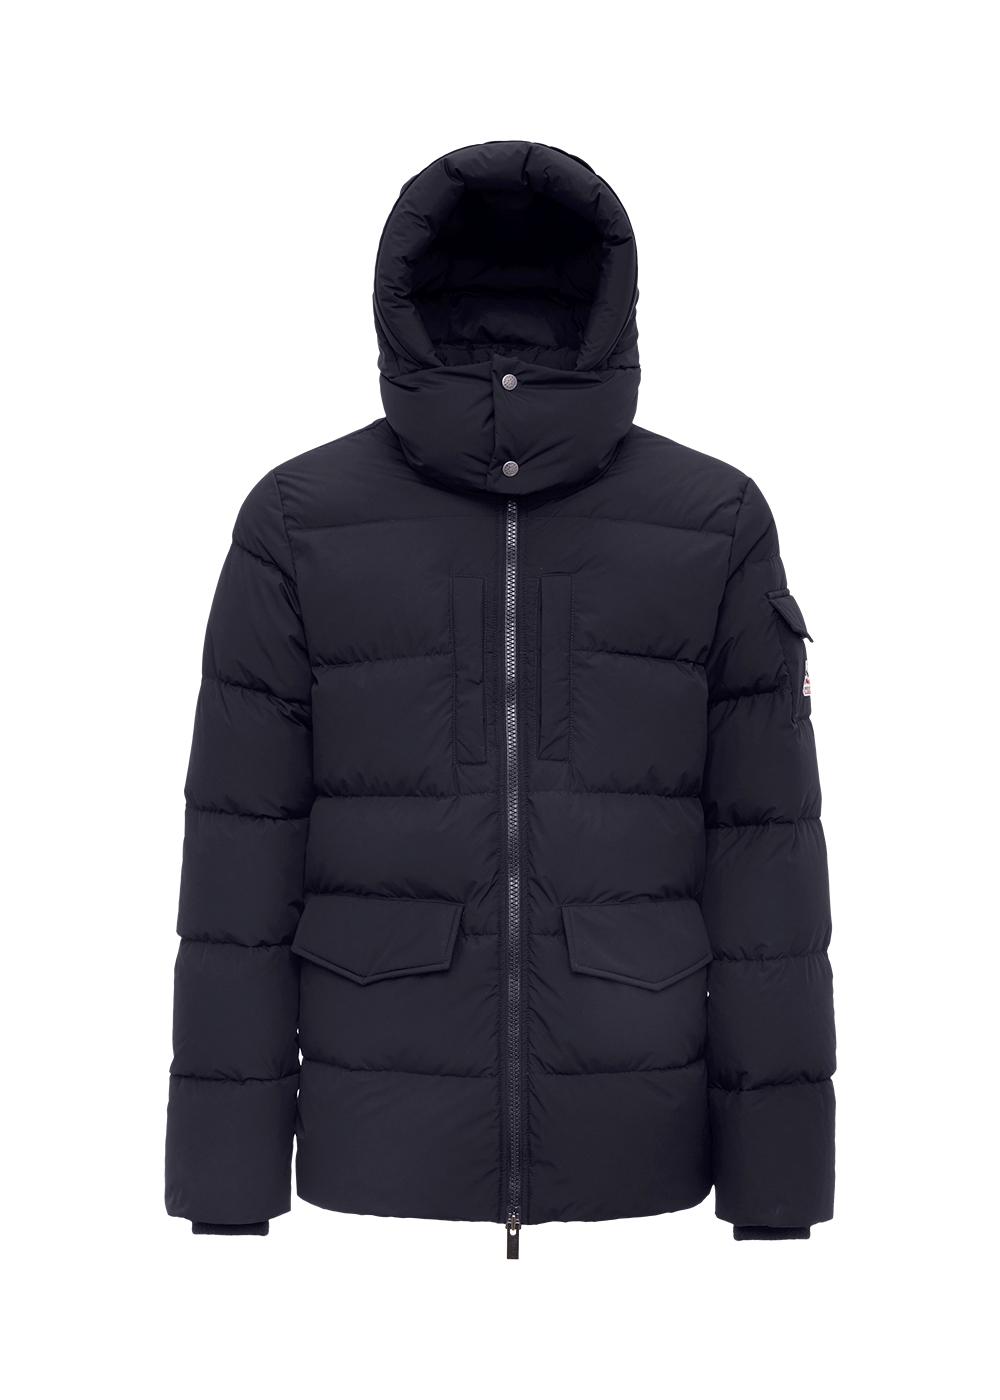 Men's Pyrenex Sterling hooded warm down jacket black-5